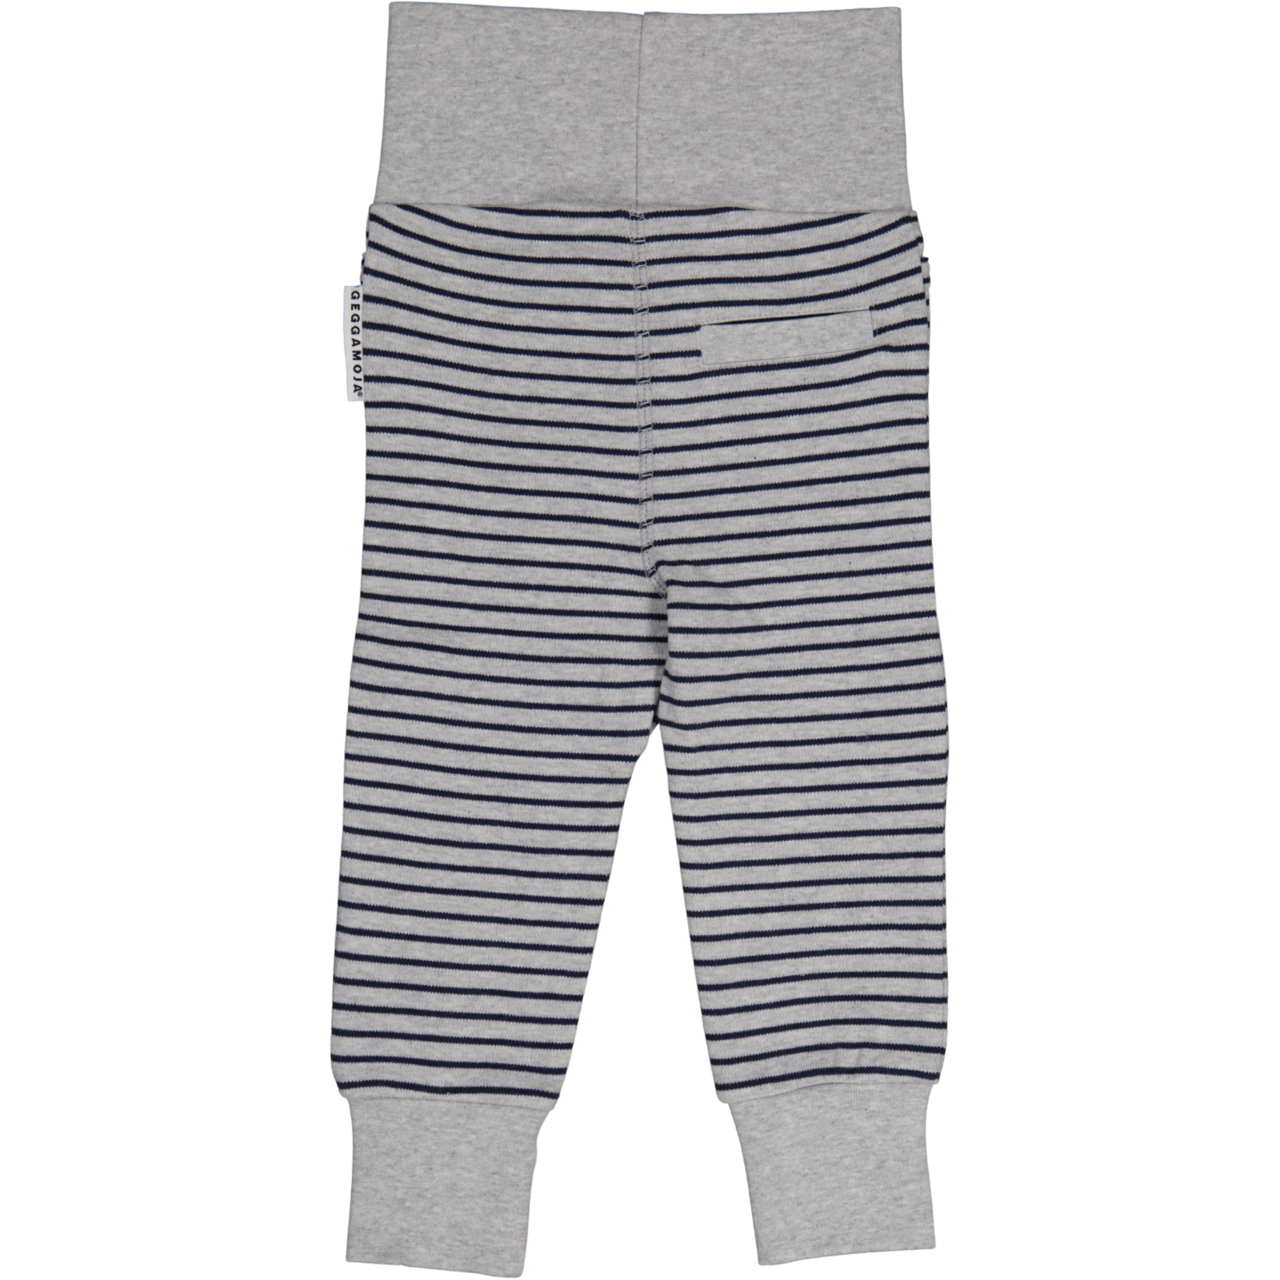 Baby trouser Grey mel/navy 86/92